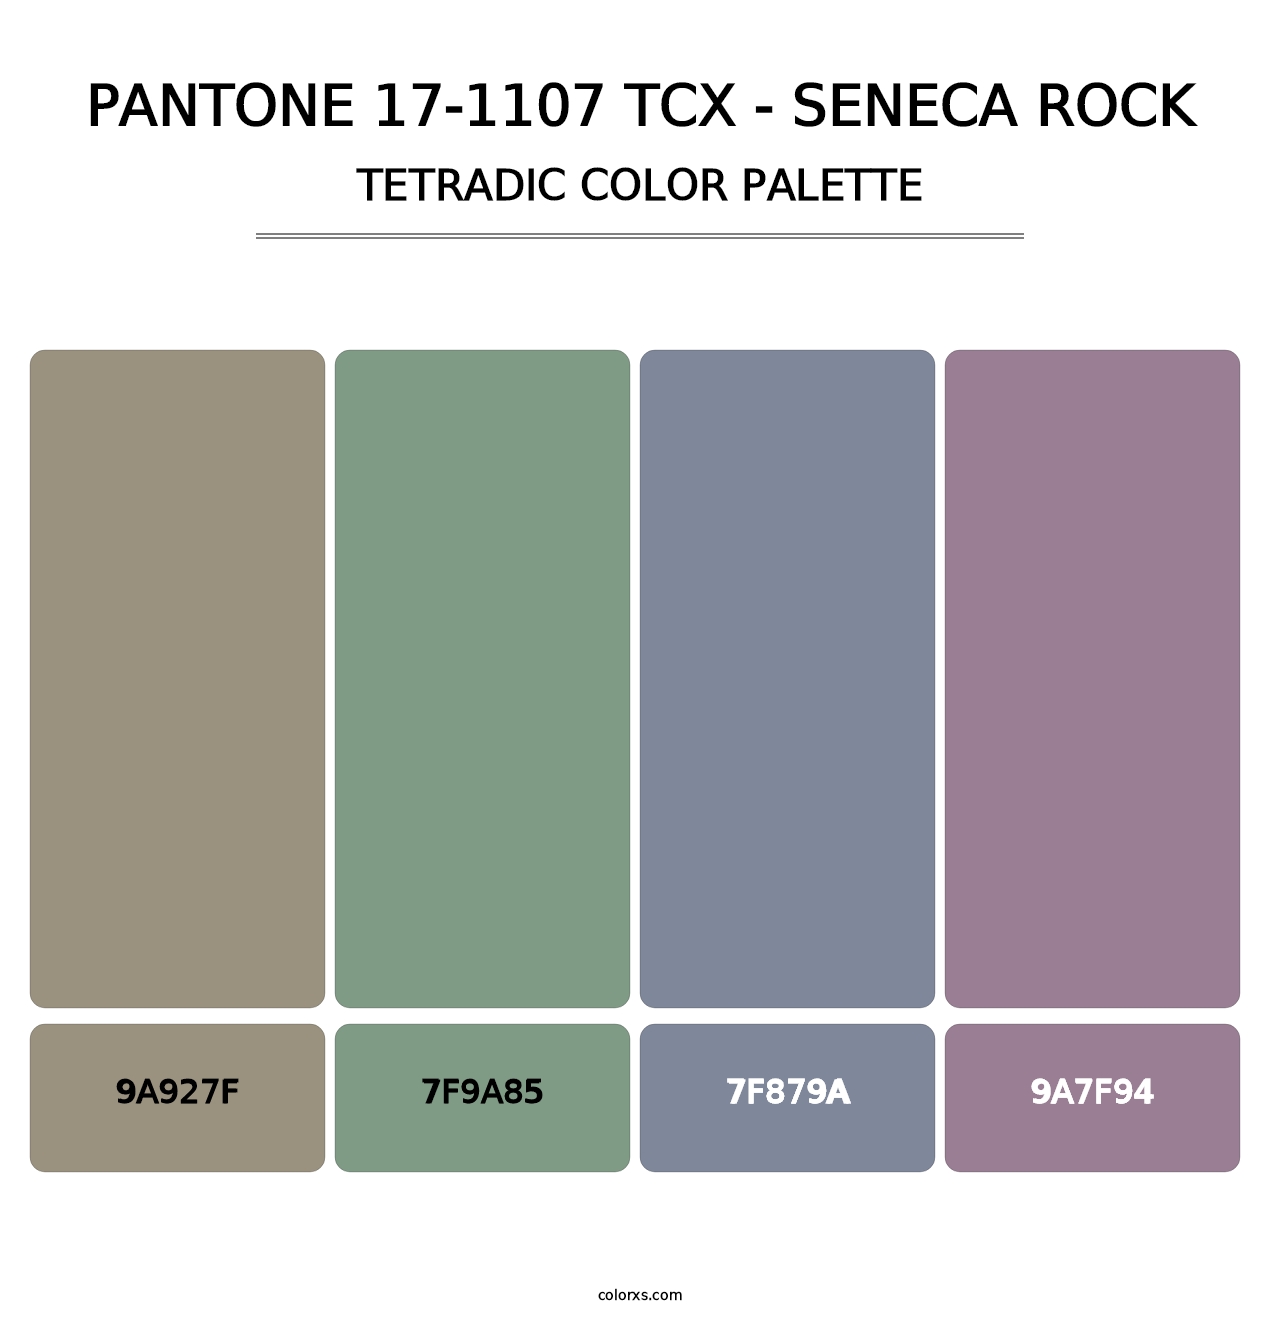 PANTONE 17-1107 TCX - Seneca Rock - Tetradic Color Palette